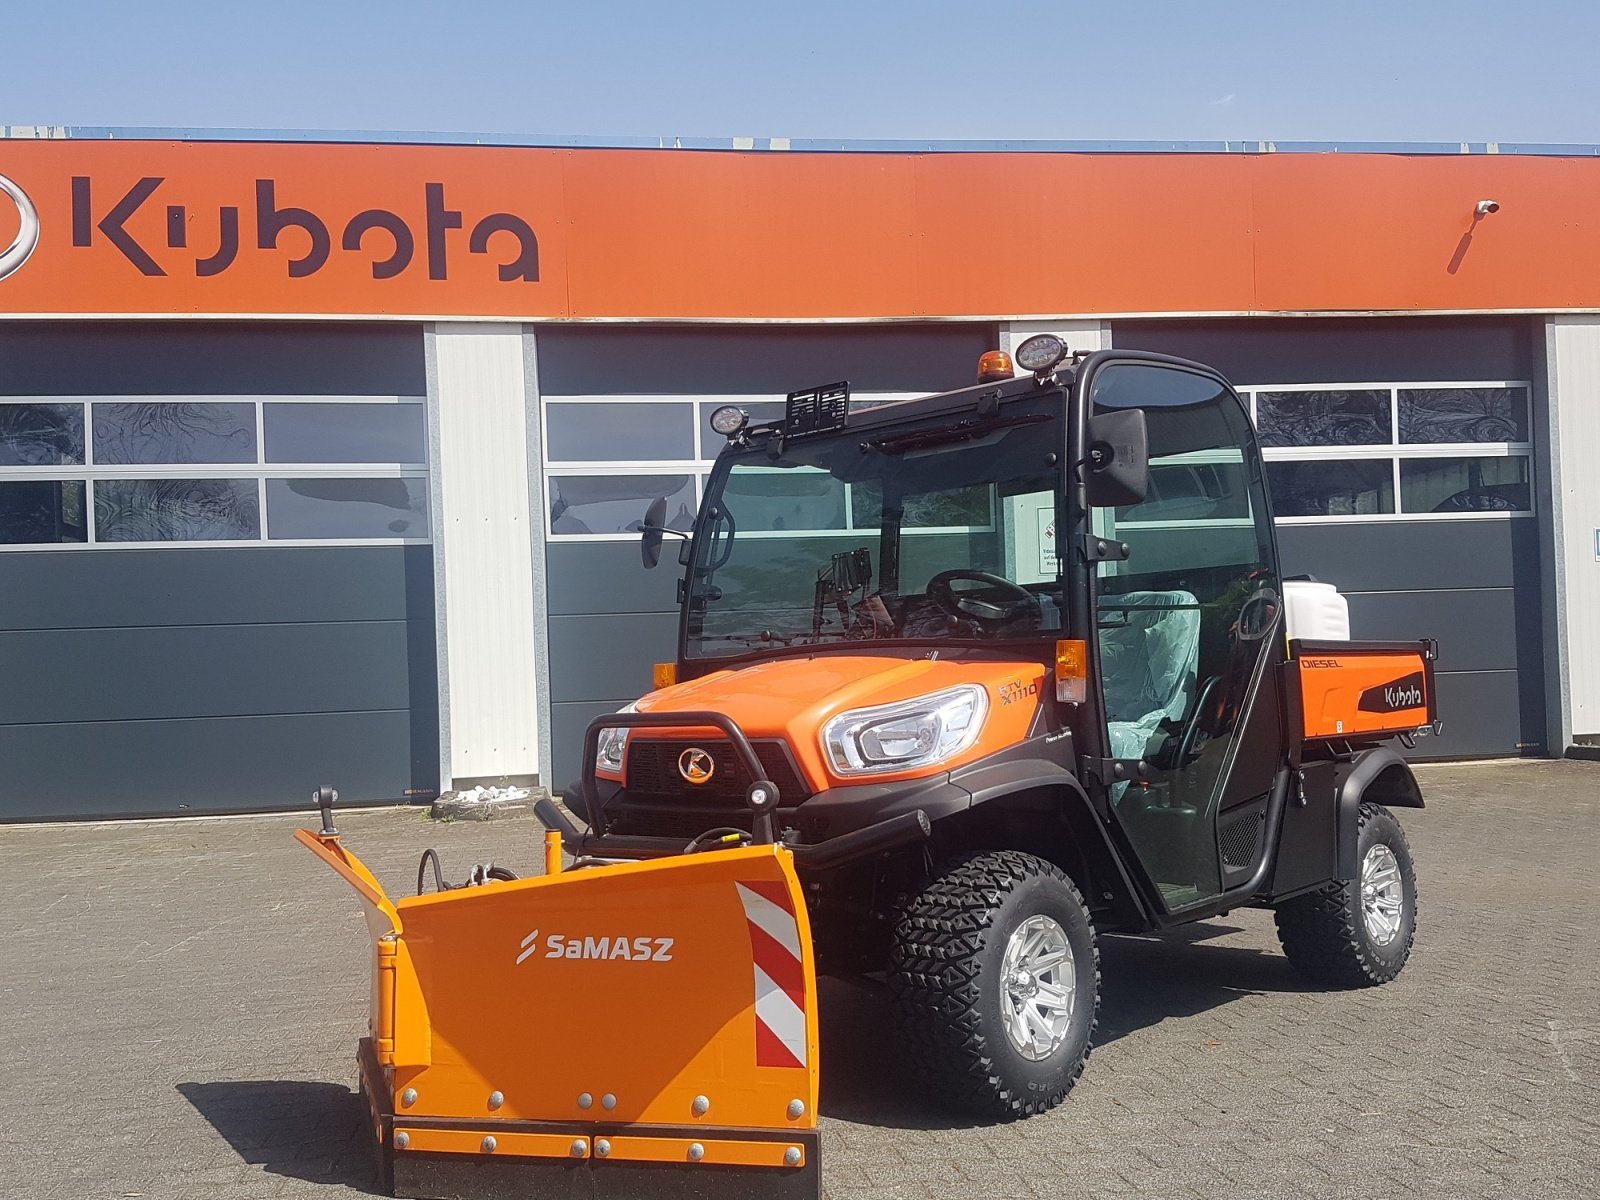 Kubota rtvx-1110 winterdienstpaket tractor €34,800